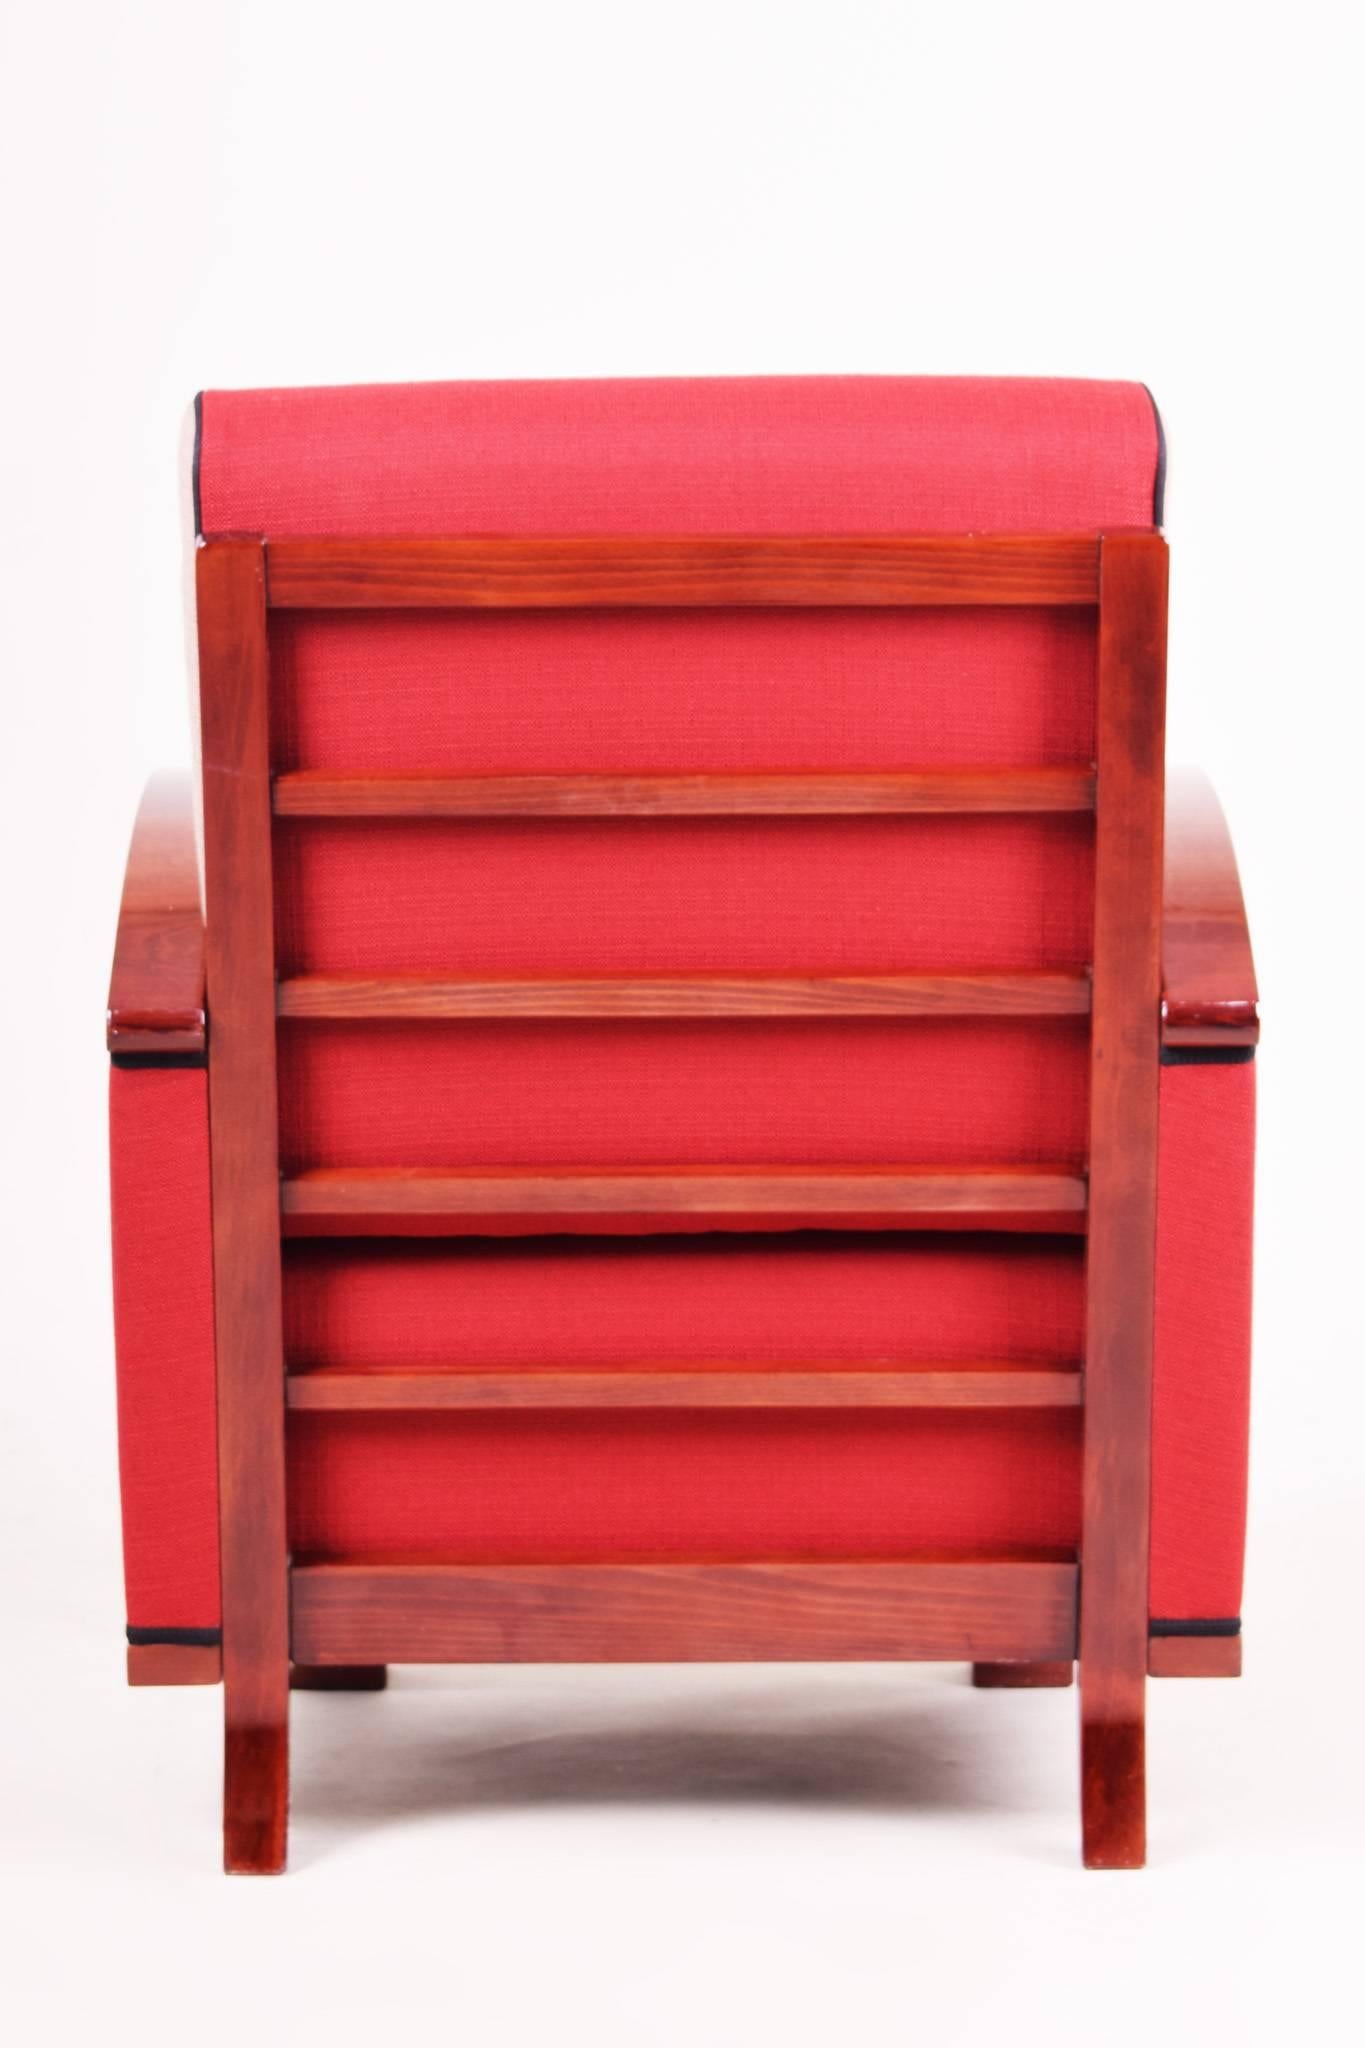 Early 20th Century Art Deco Armchair from Czechoslovakia, Period: 1920-1929, Walnut, New upholstery